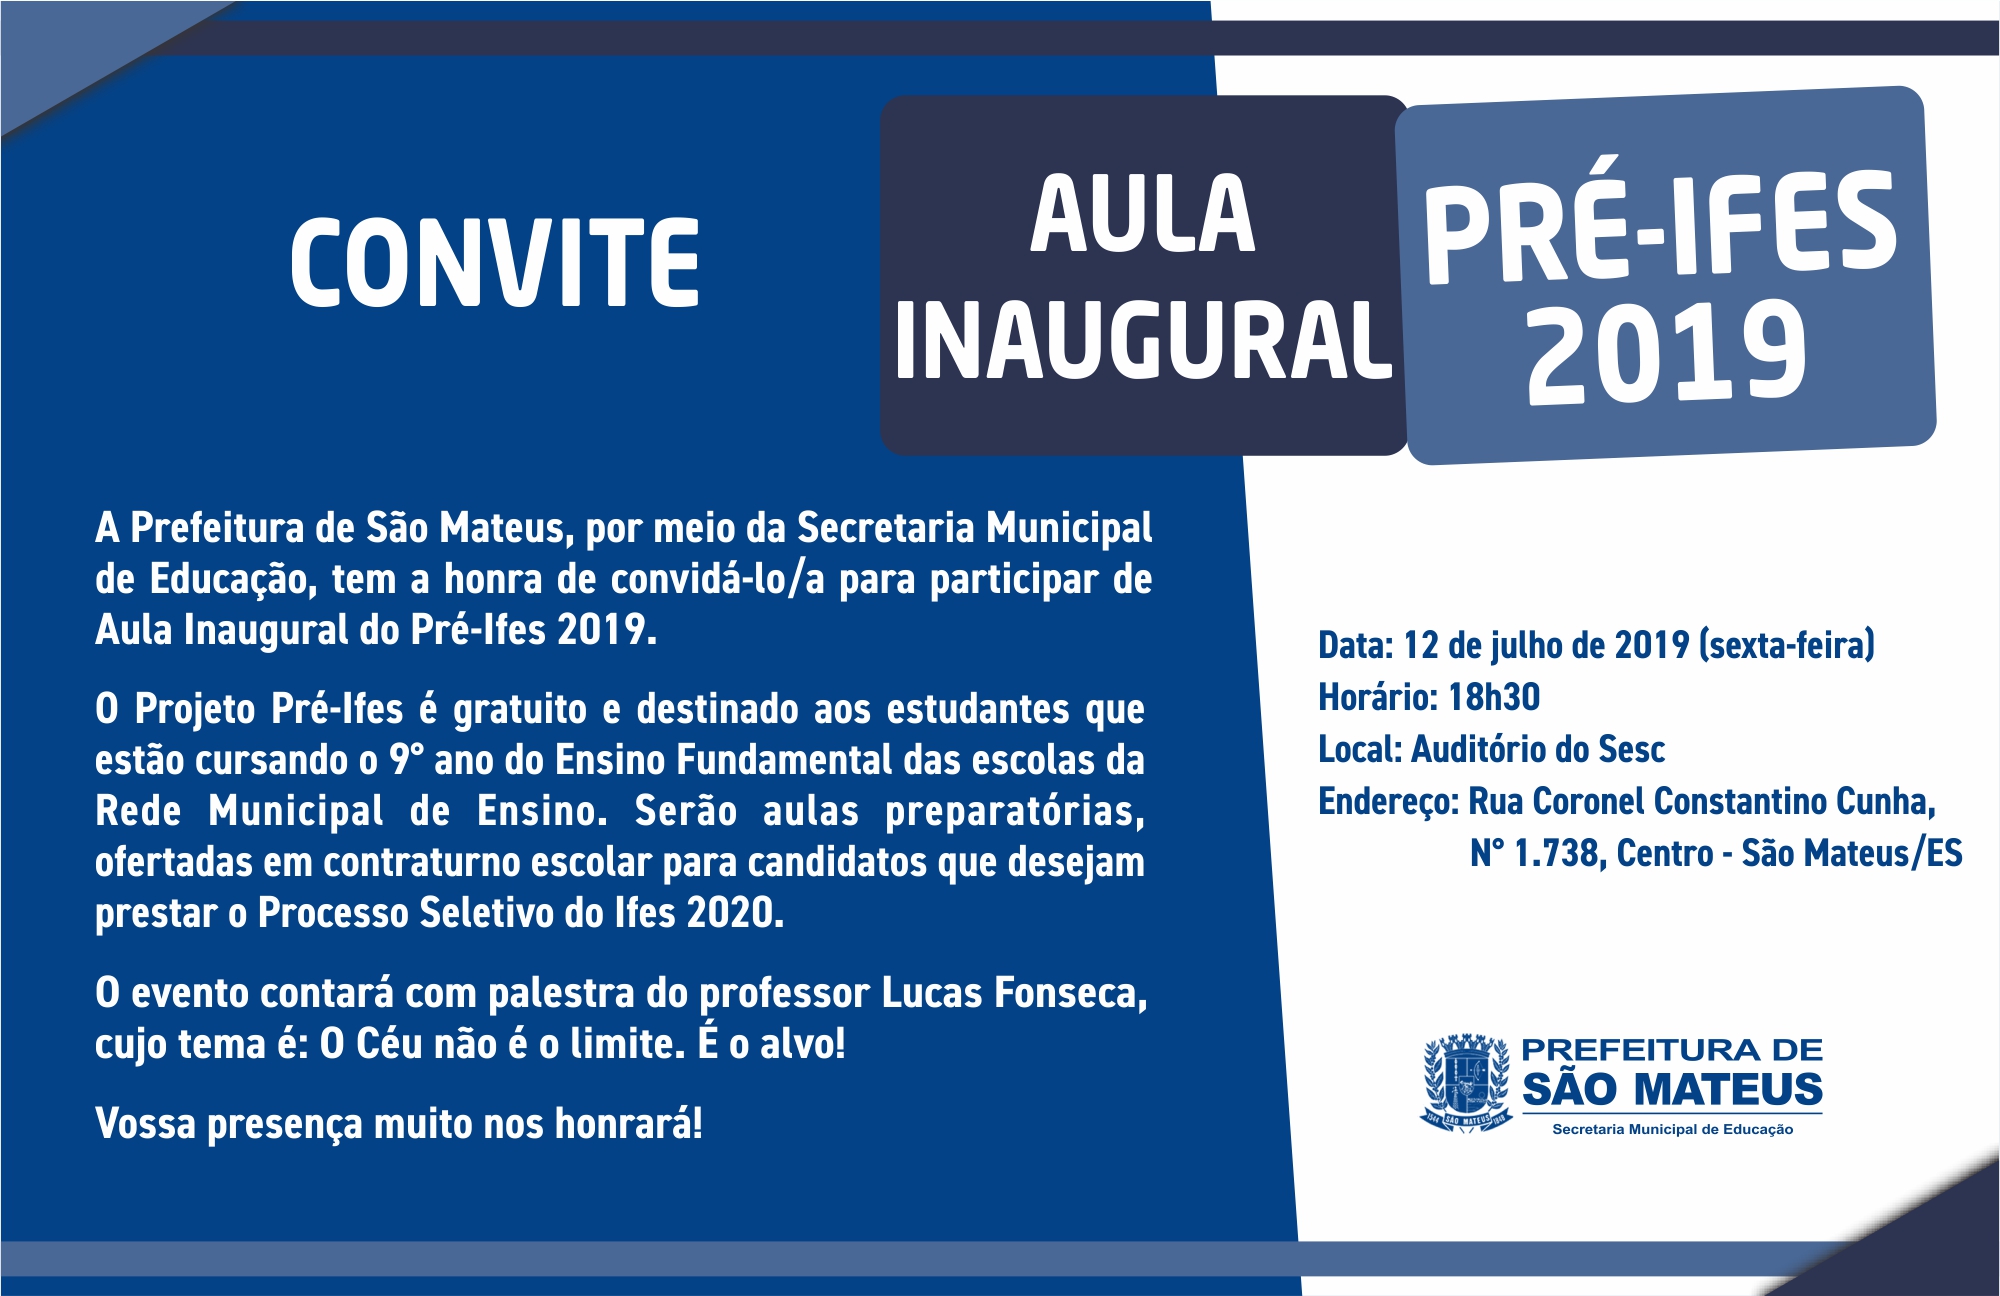 AULA INAUGURAL PRÉ-IFES 2019